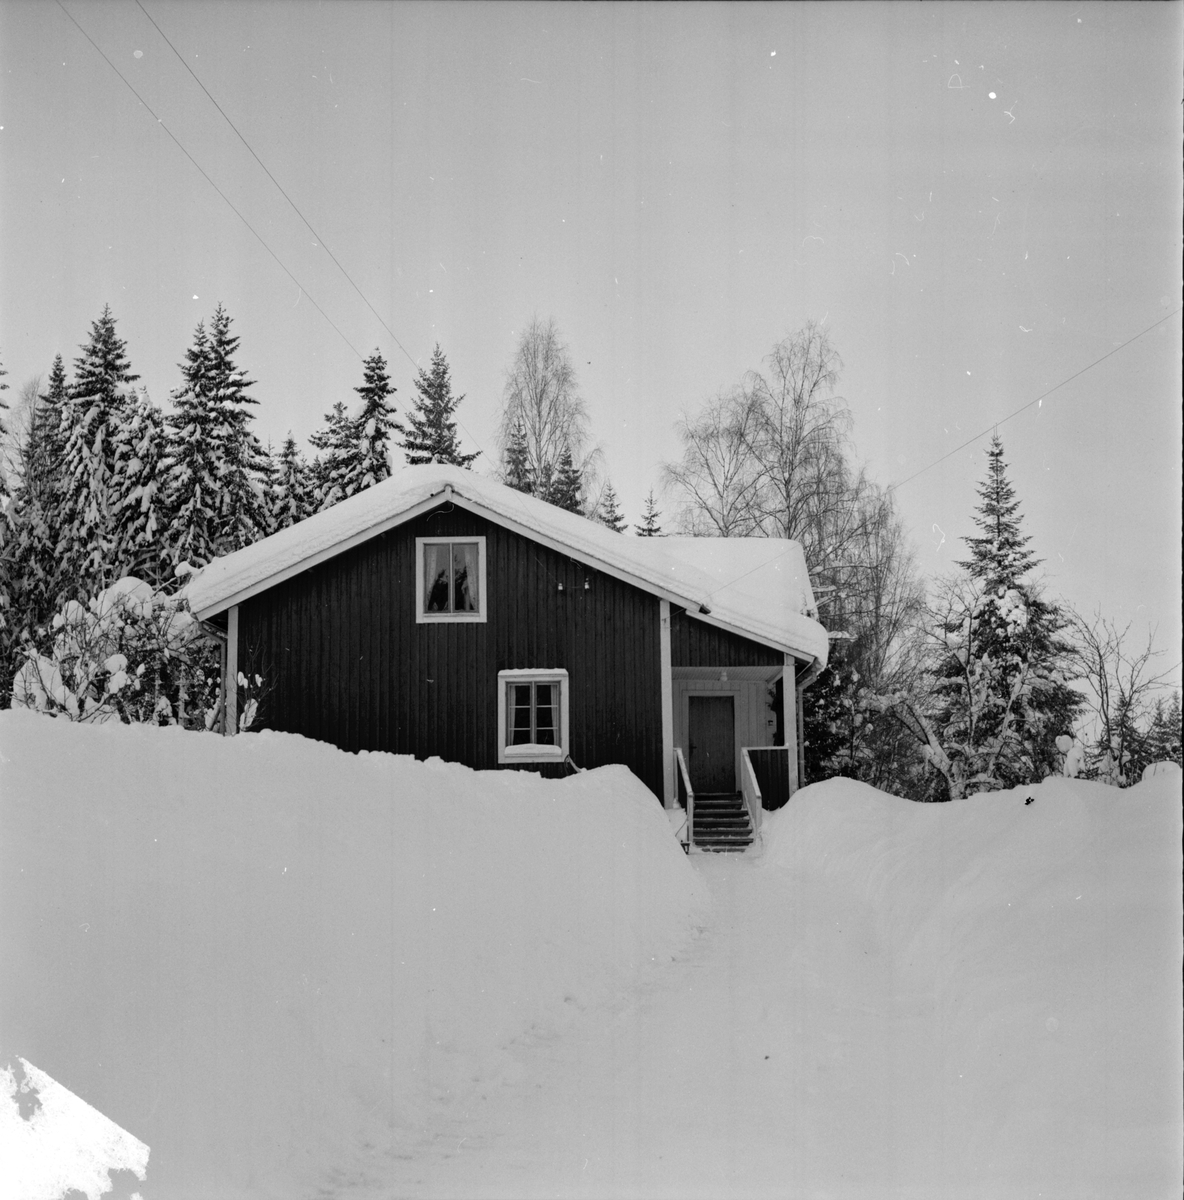 Nordström Anders,
Hertsjö,
9 Febr 1966